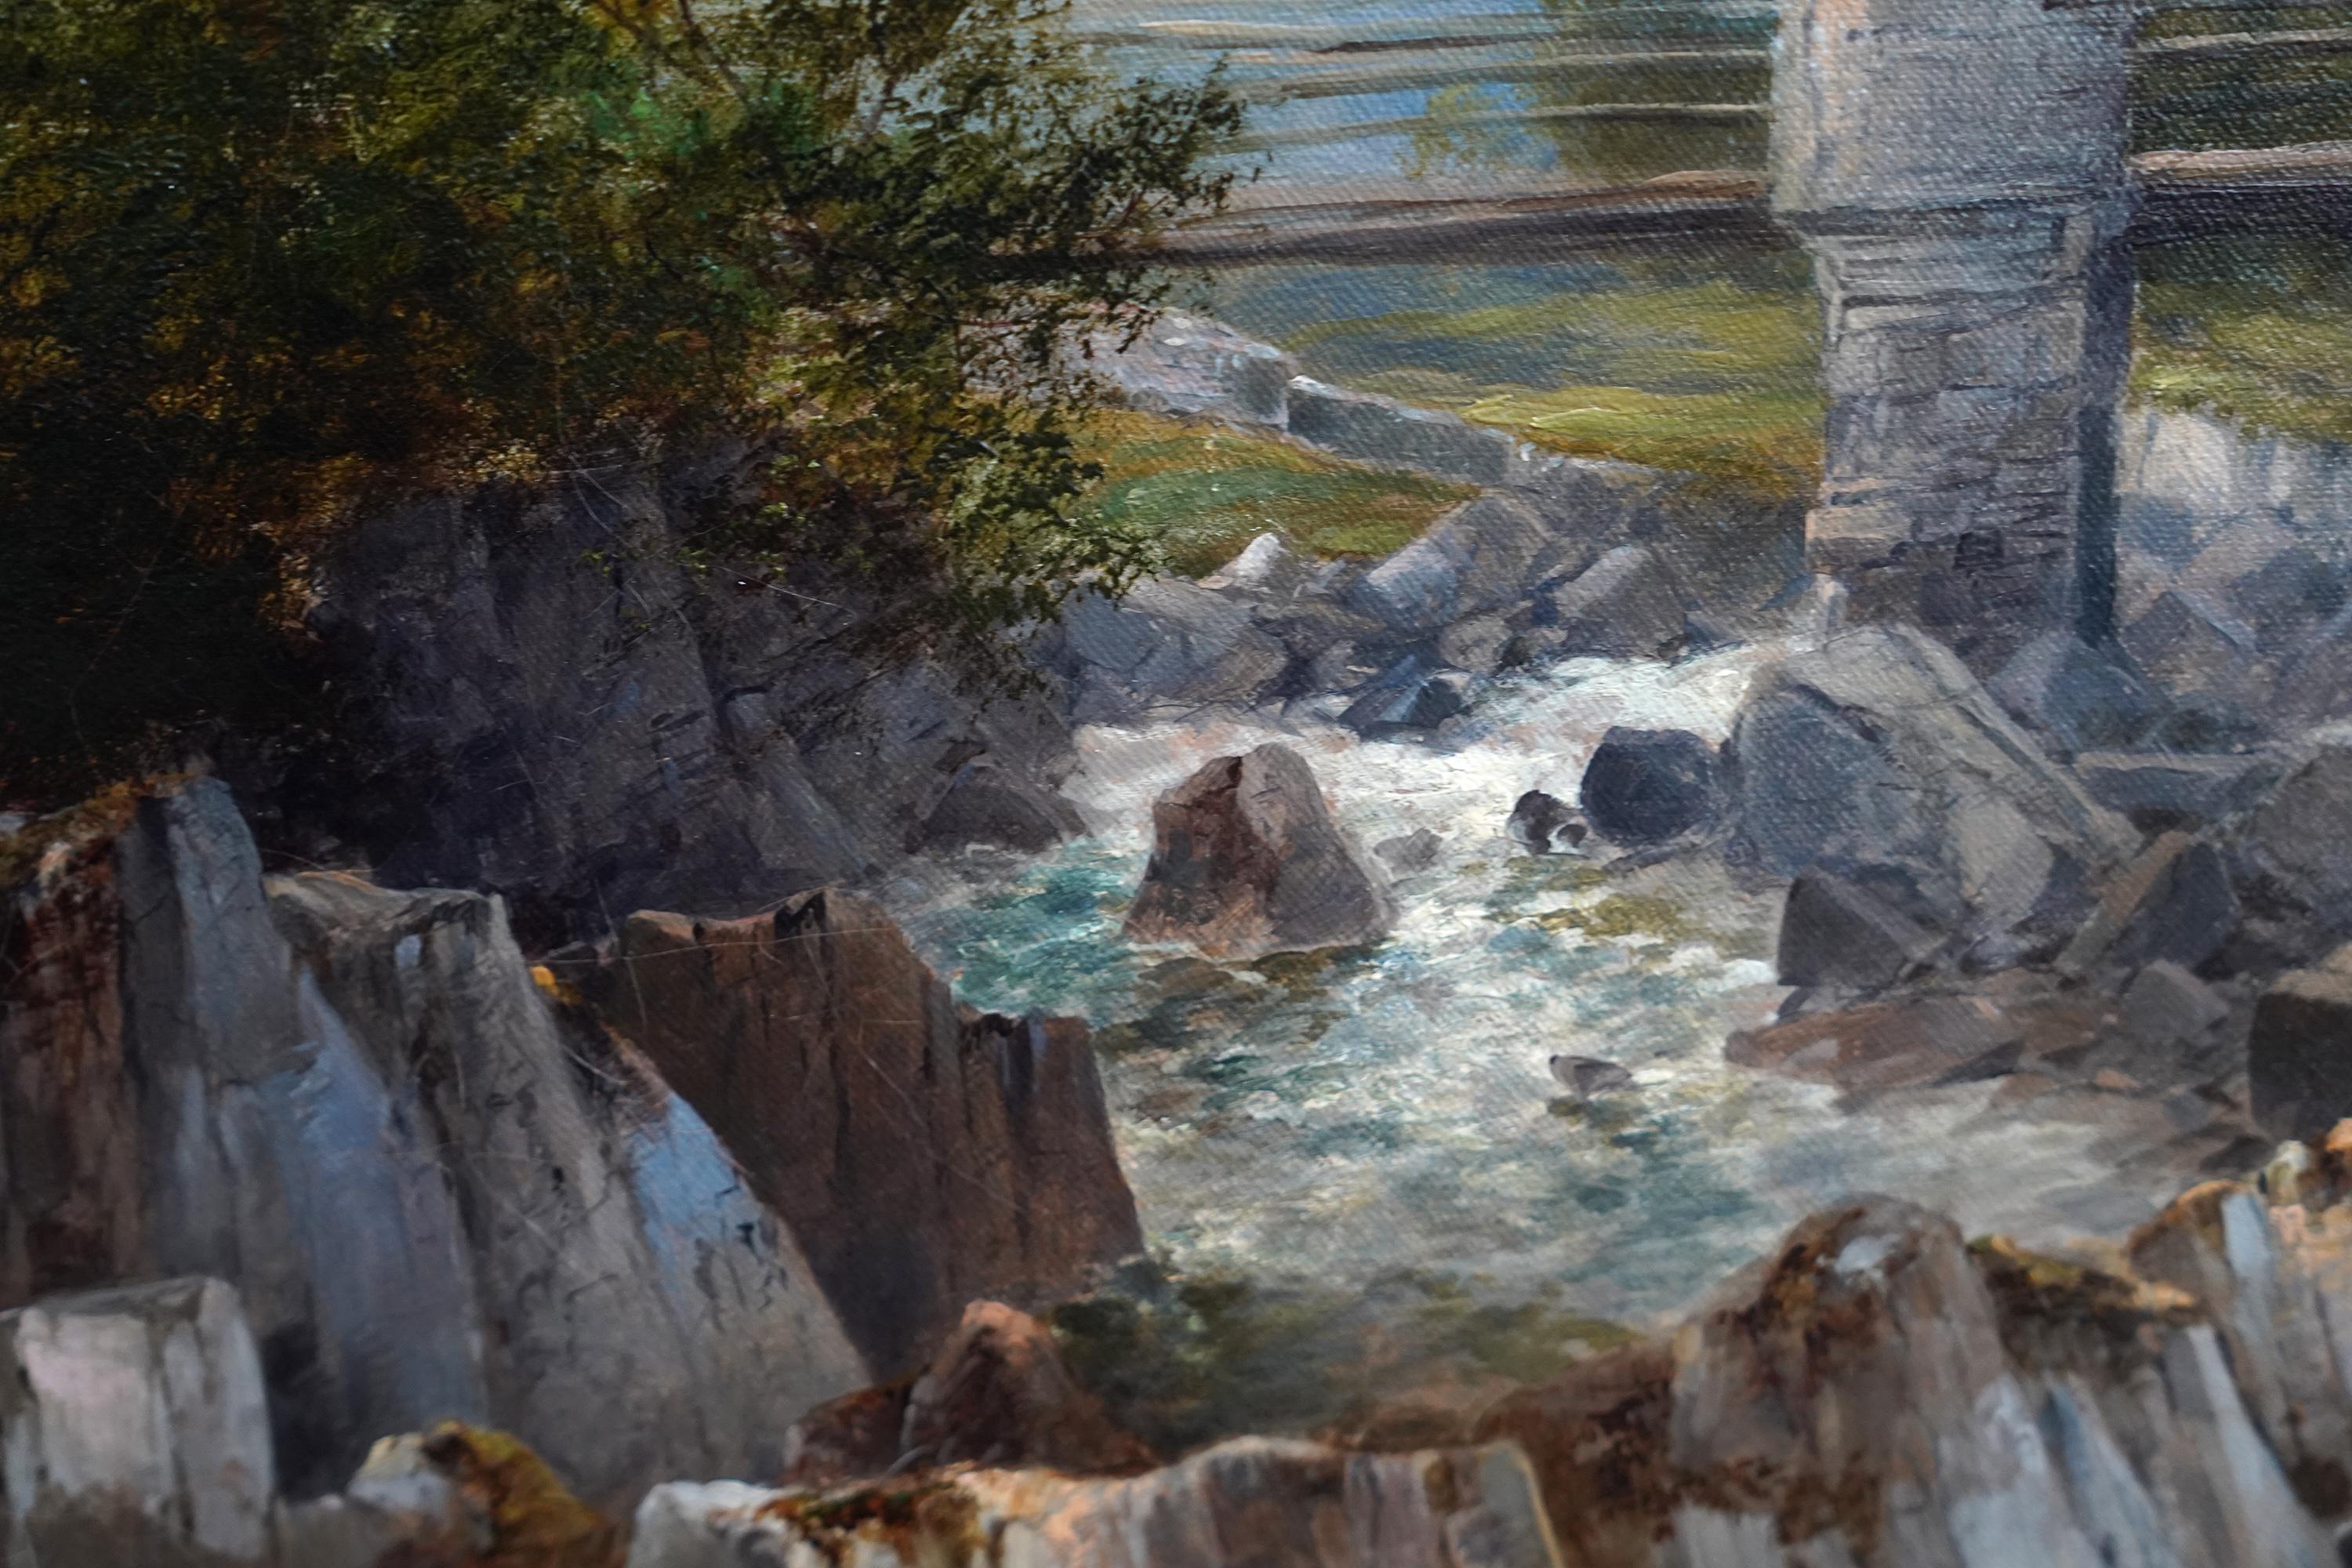 Highland River Landscape - British 19th century Scottish landscape oil painting For Sale 5